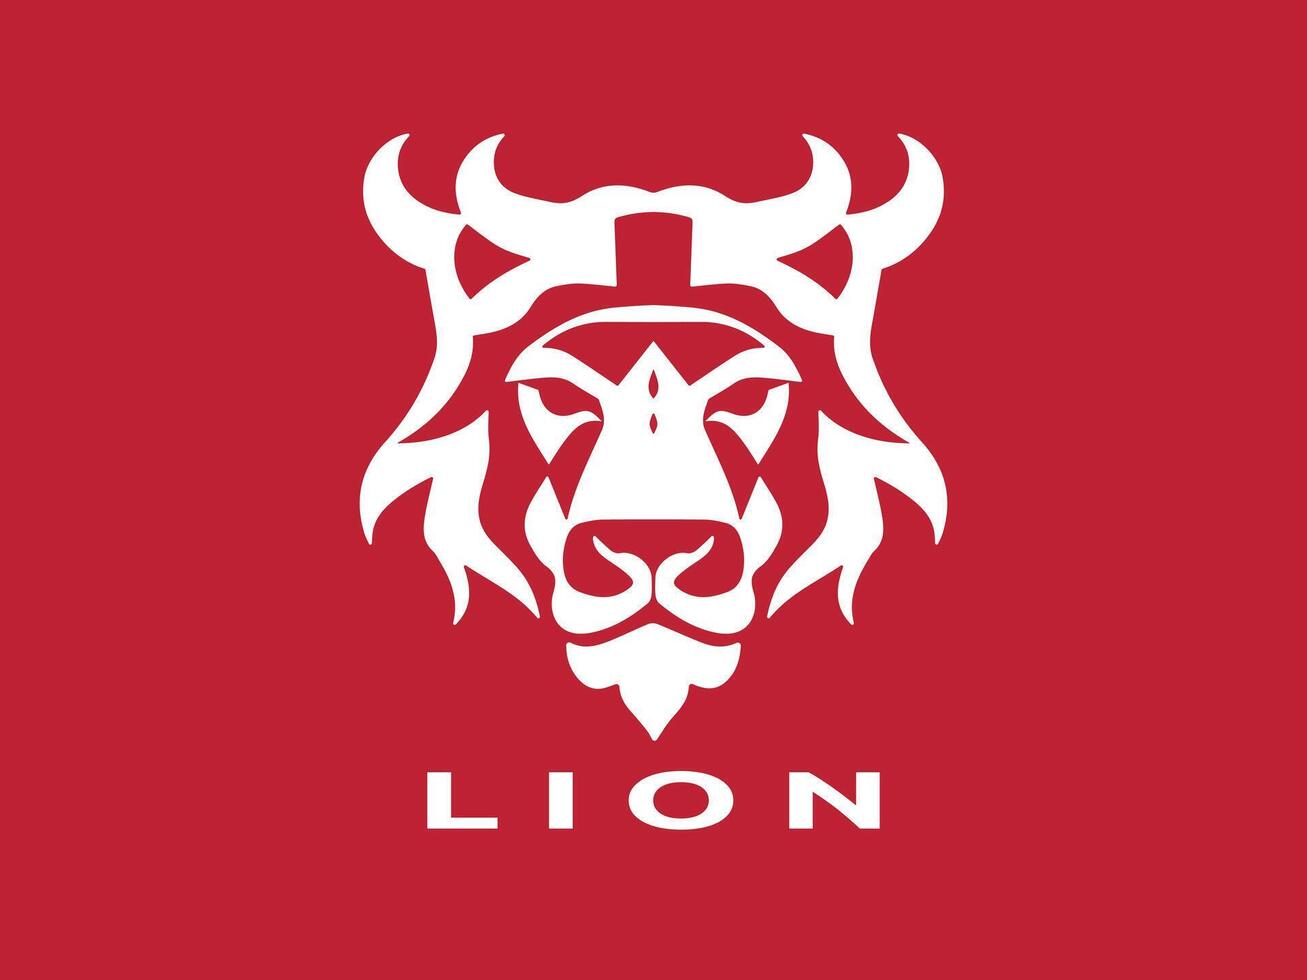 Viking lion logo design vector template